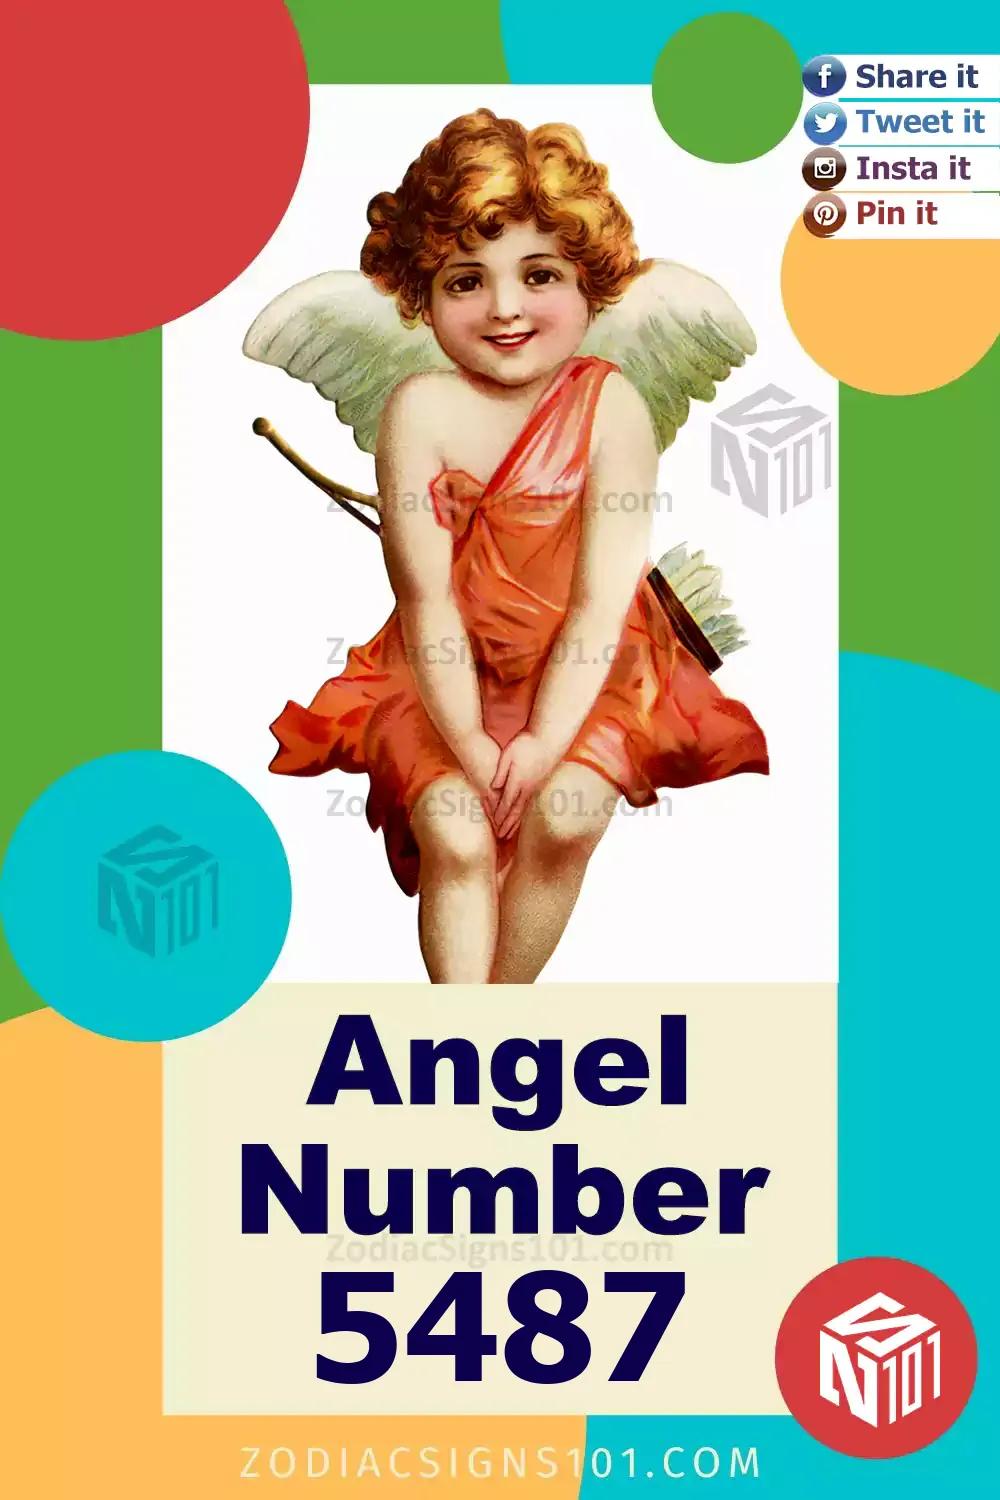 5487-Angel-Number-Meaning.jpg